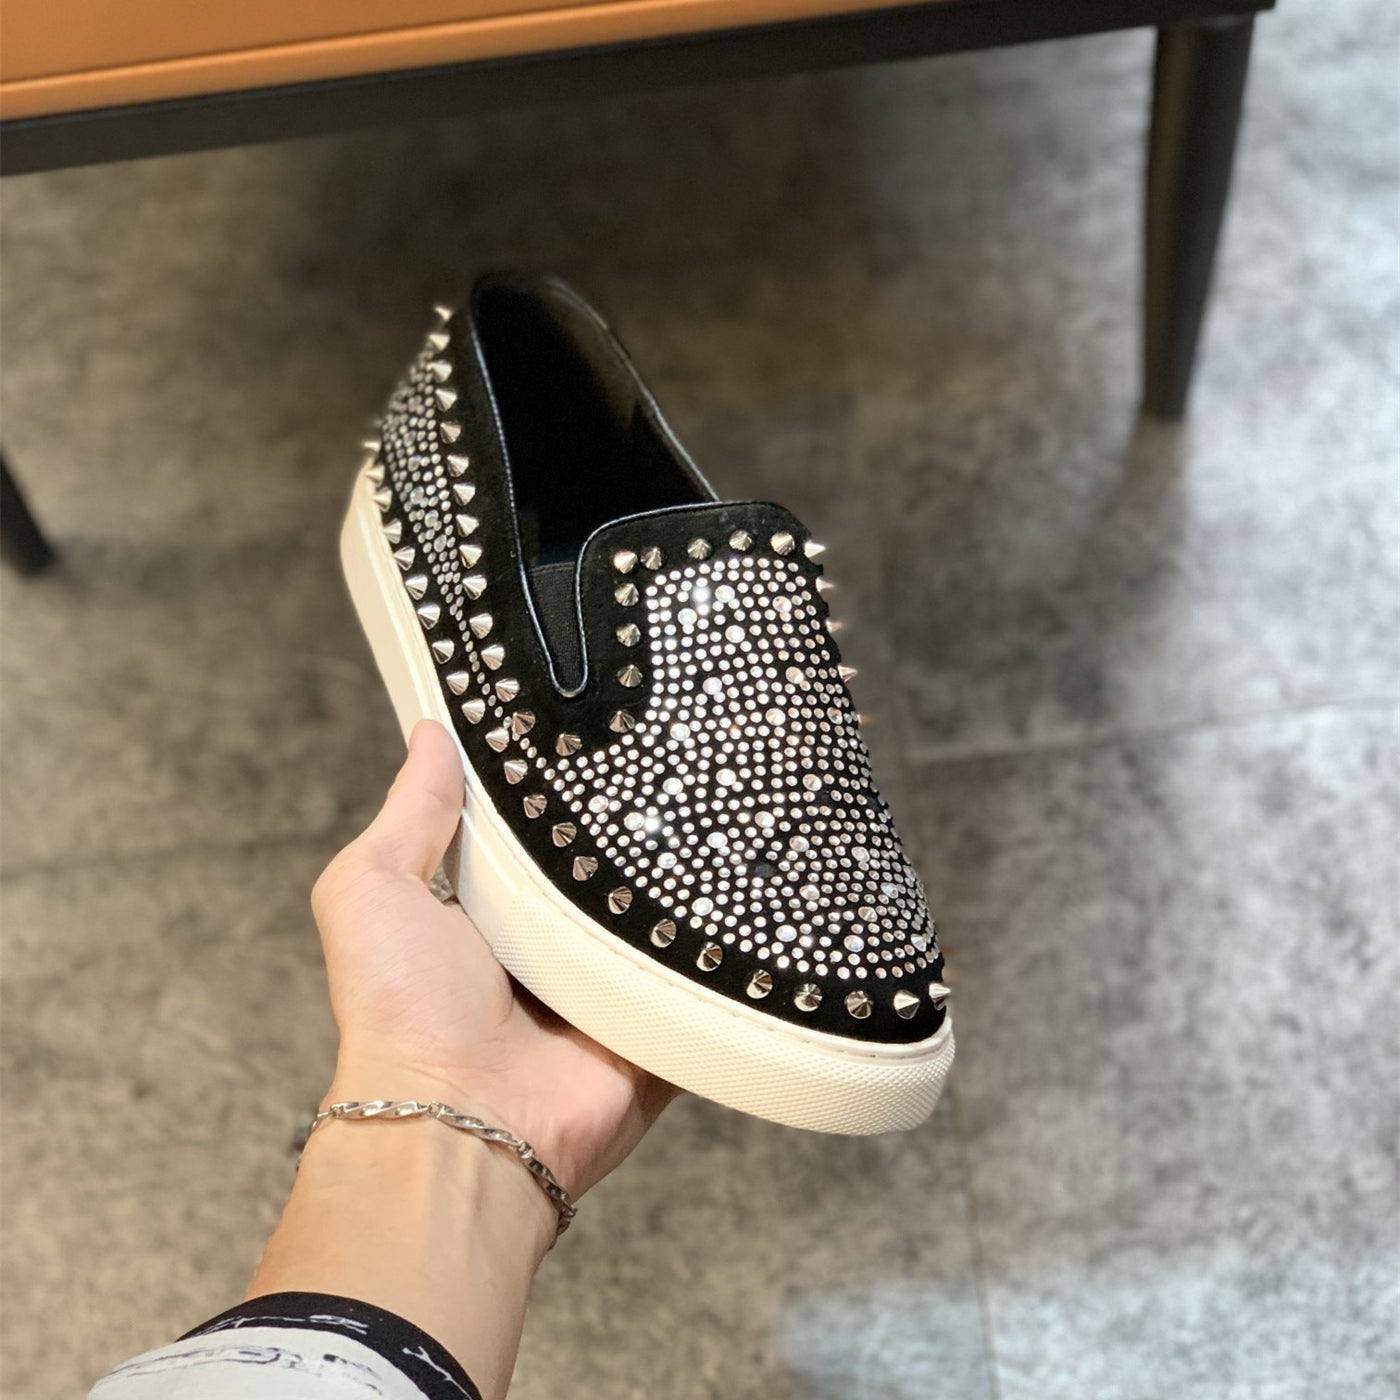 Luxury Designer Shoes Spiked Diamond